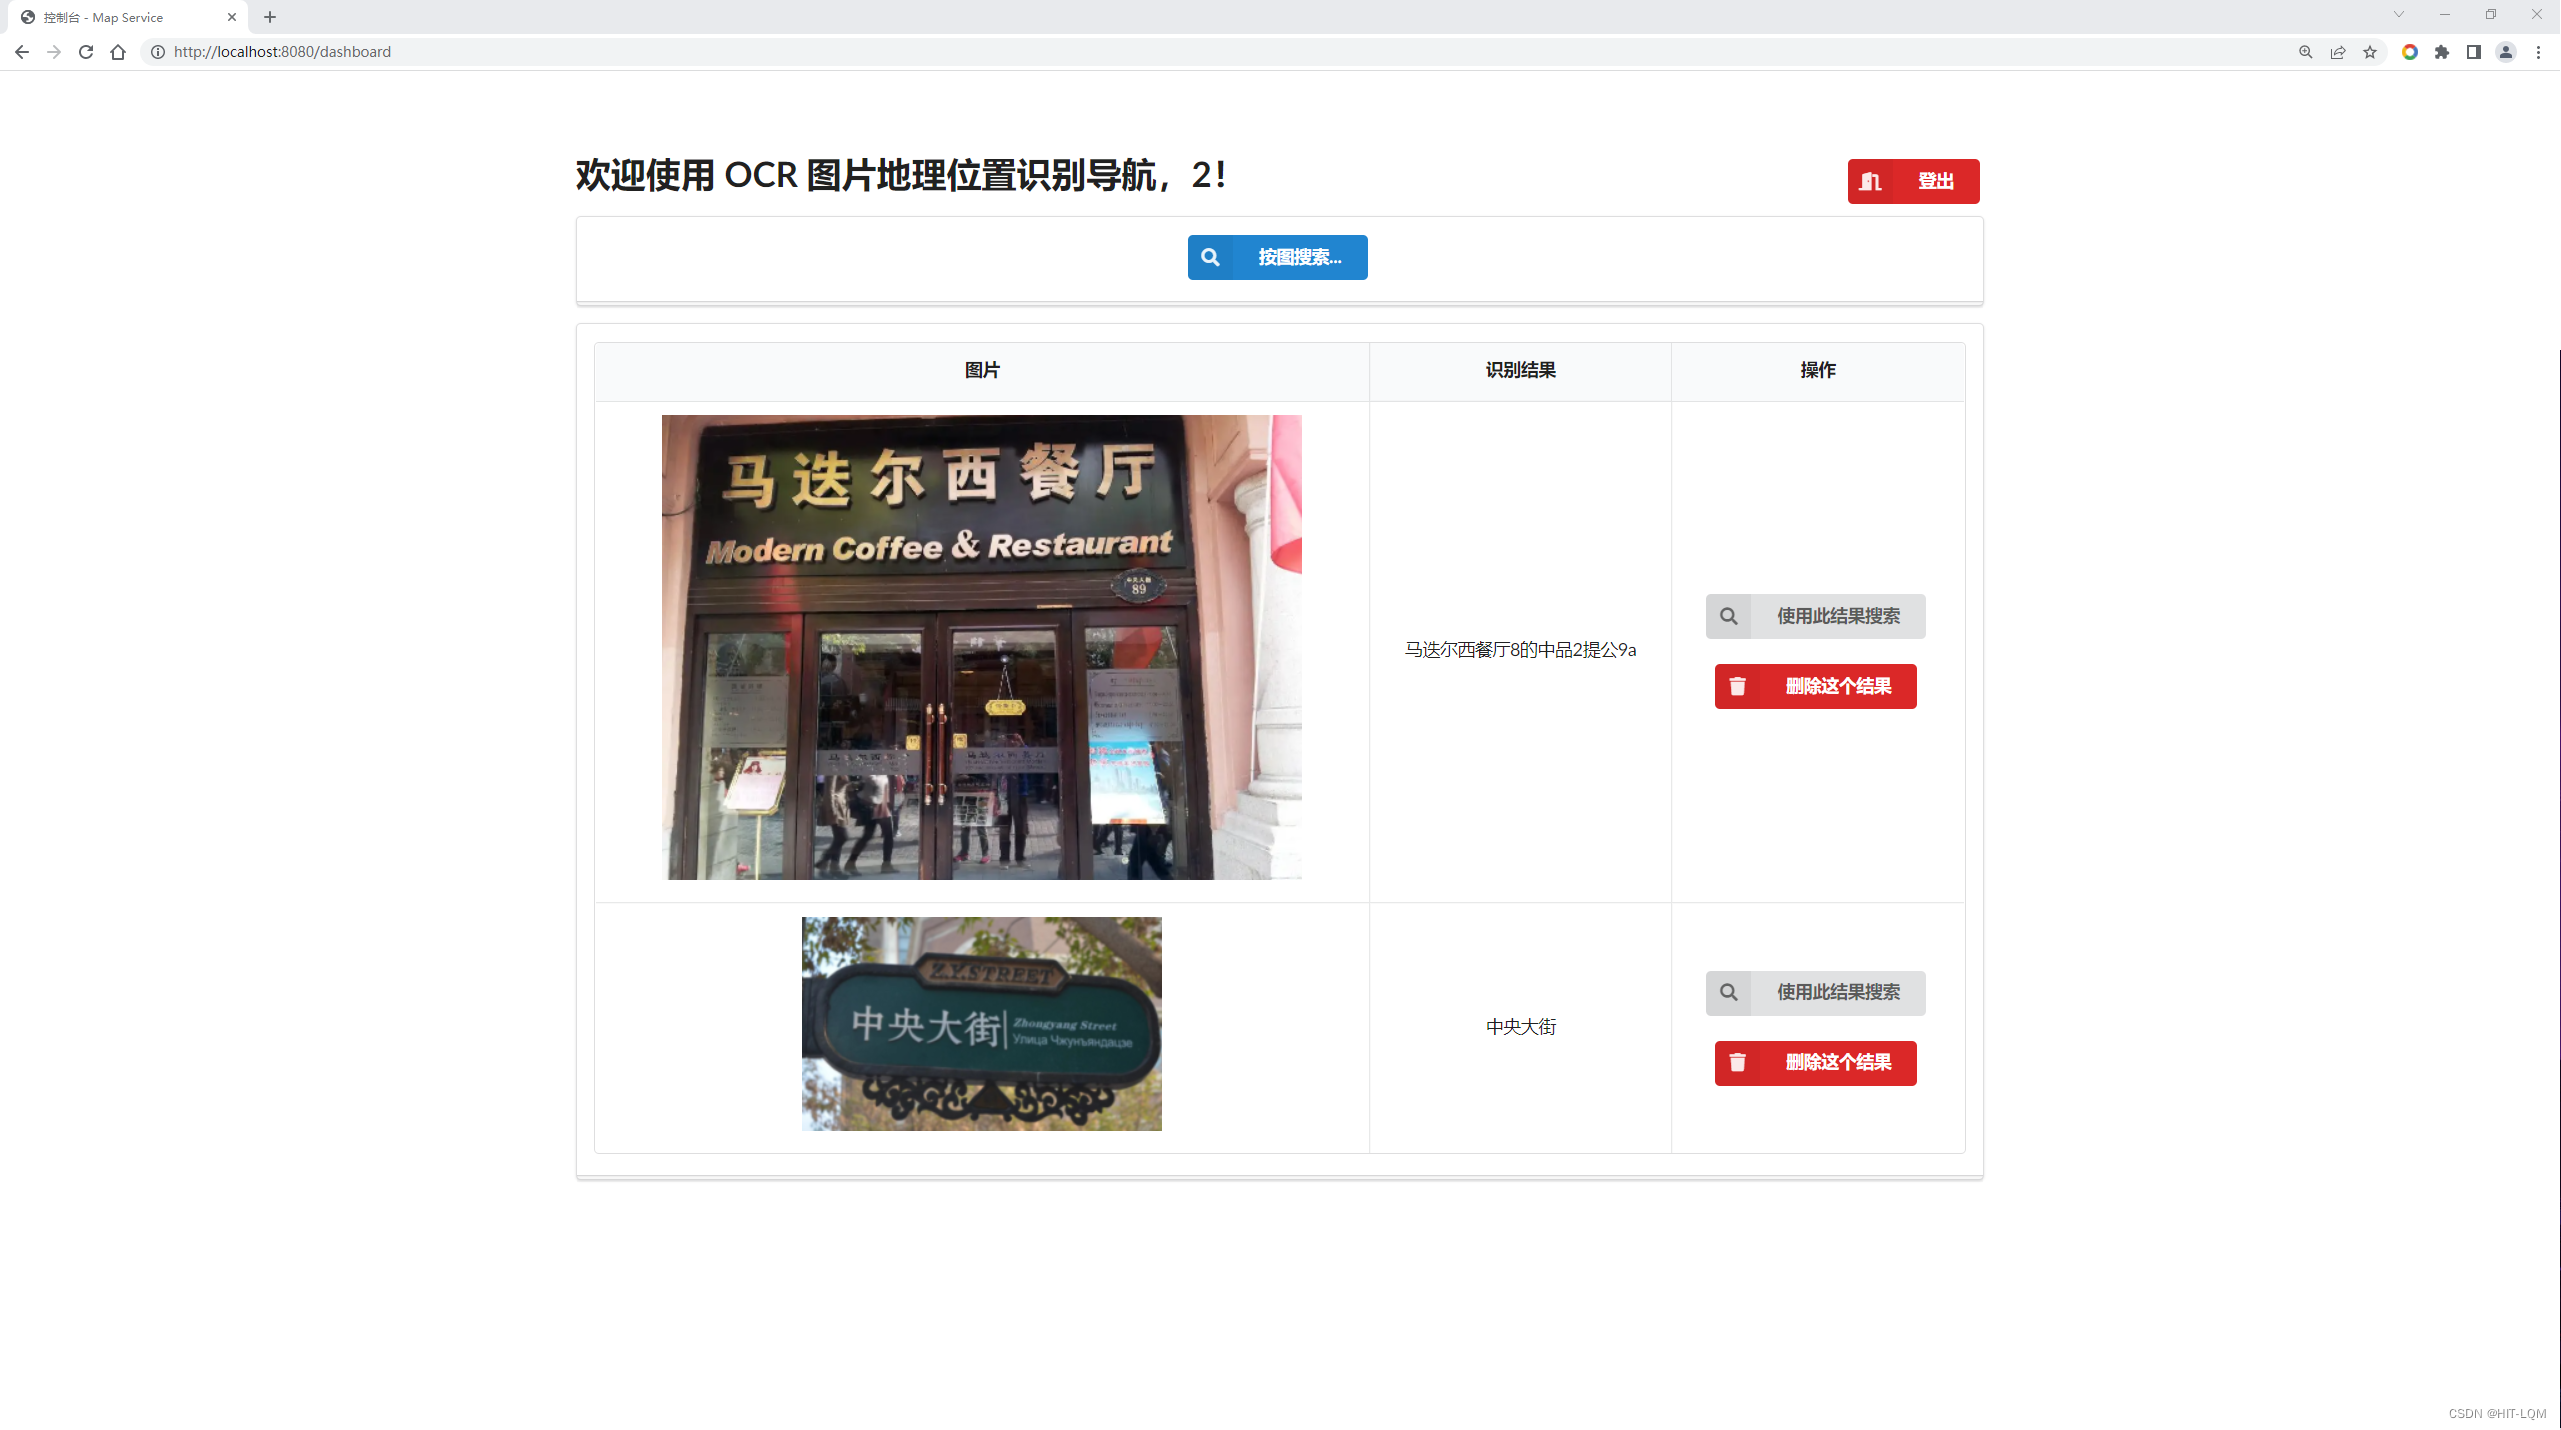 WebService基于Baidu OCR和Map API的导航服务